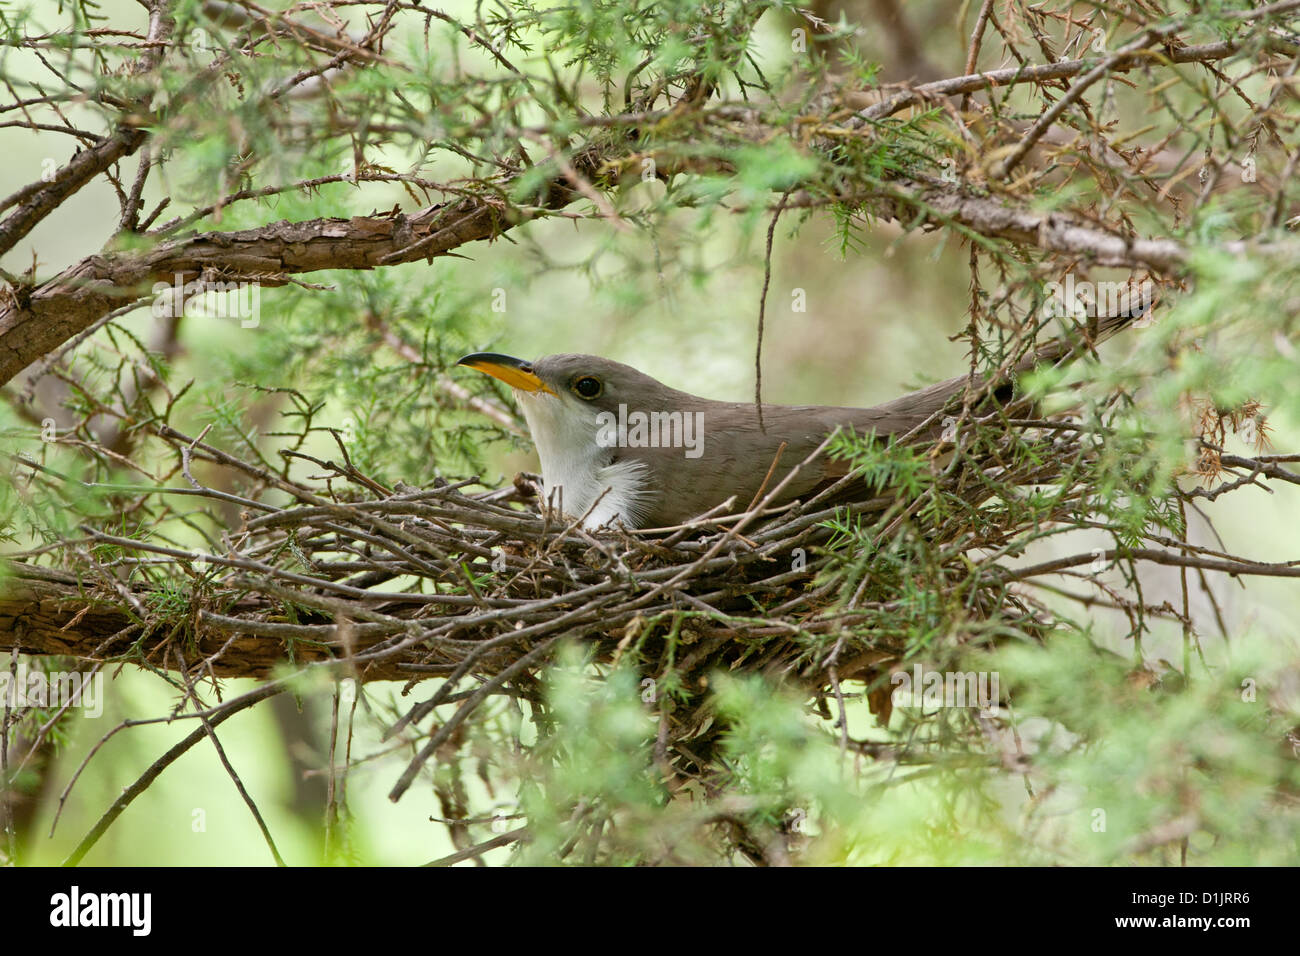 Cucucuculo giallo su nido uccello nidi uccelli songbird songbirds Ornithology Scienza natura natura ambiente cucucucucucuculo Foto Stock